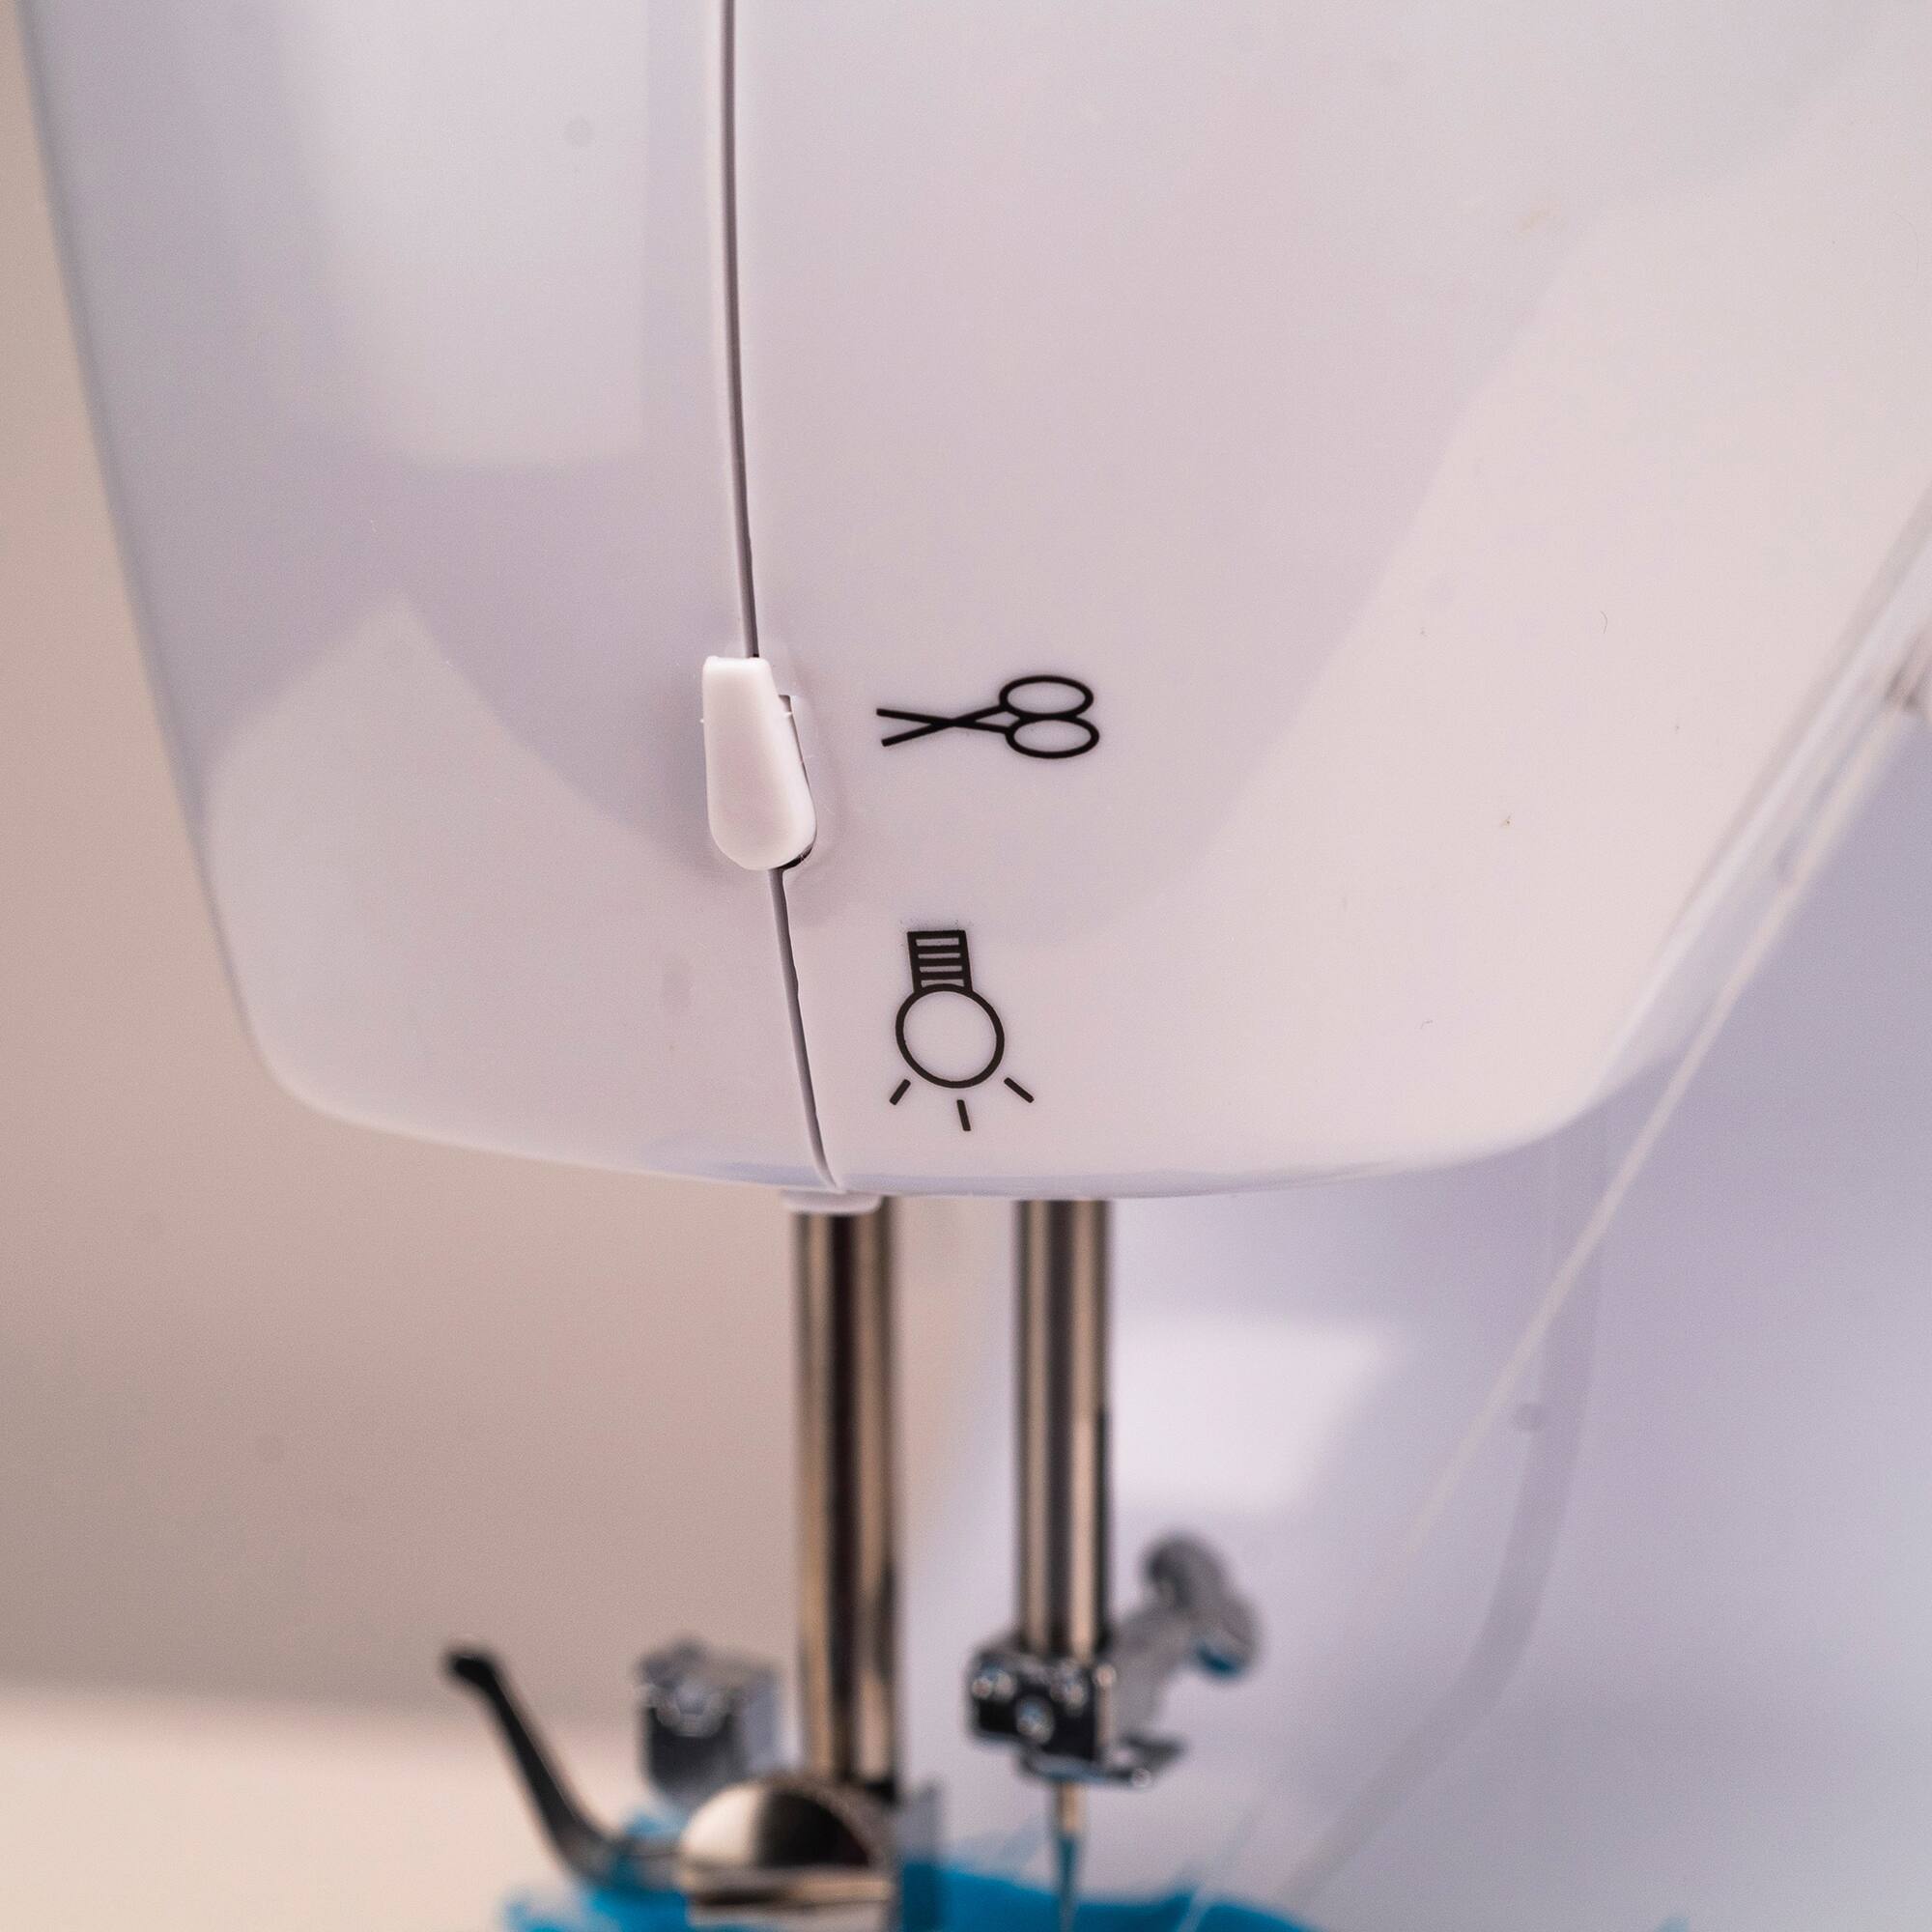 SS-700+ 16-Stitch Desktop Sewing Machine